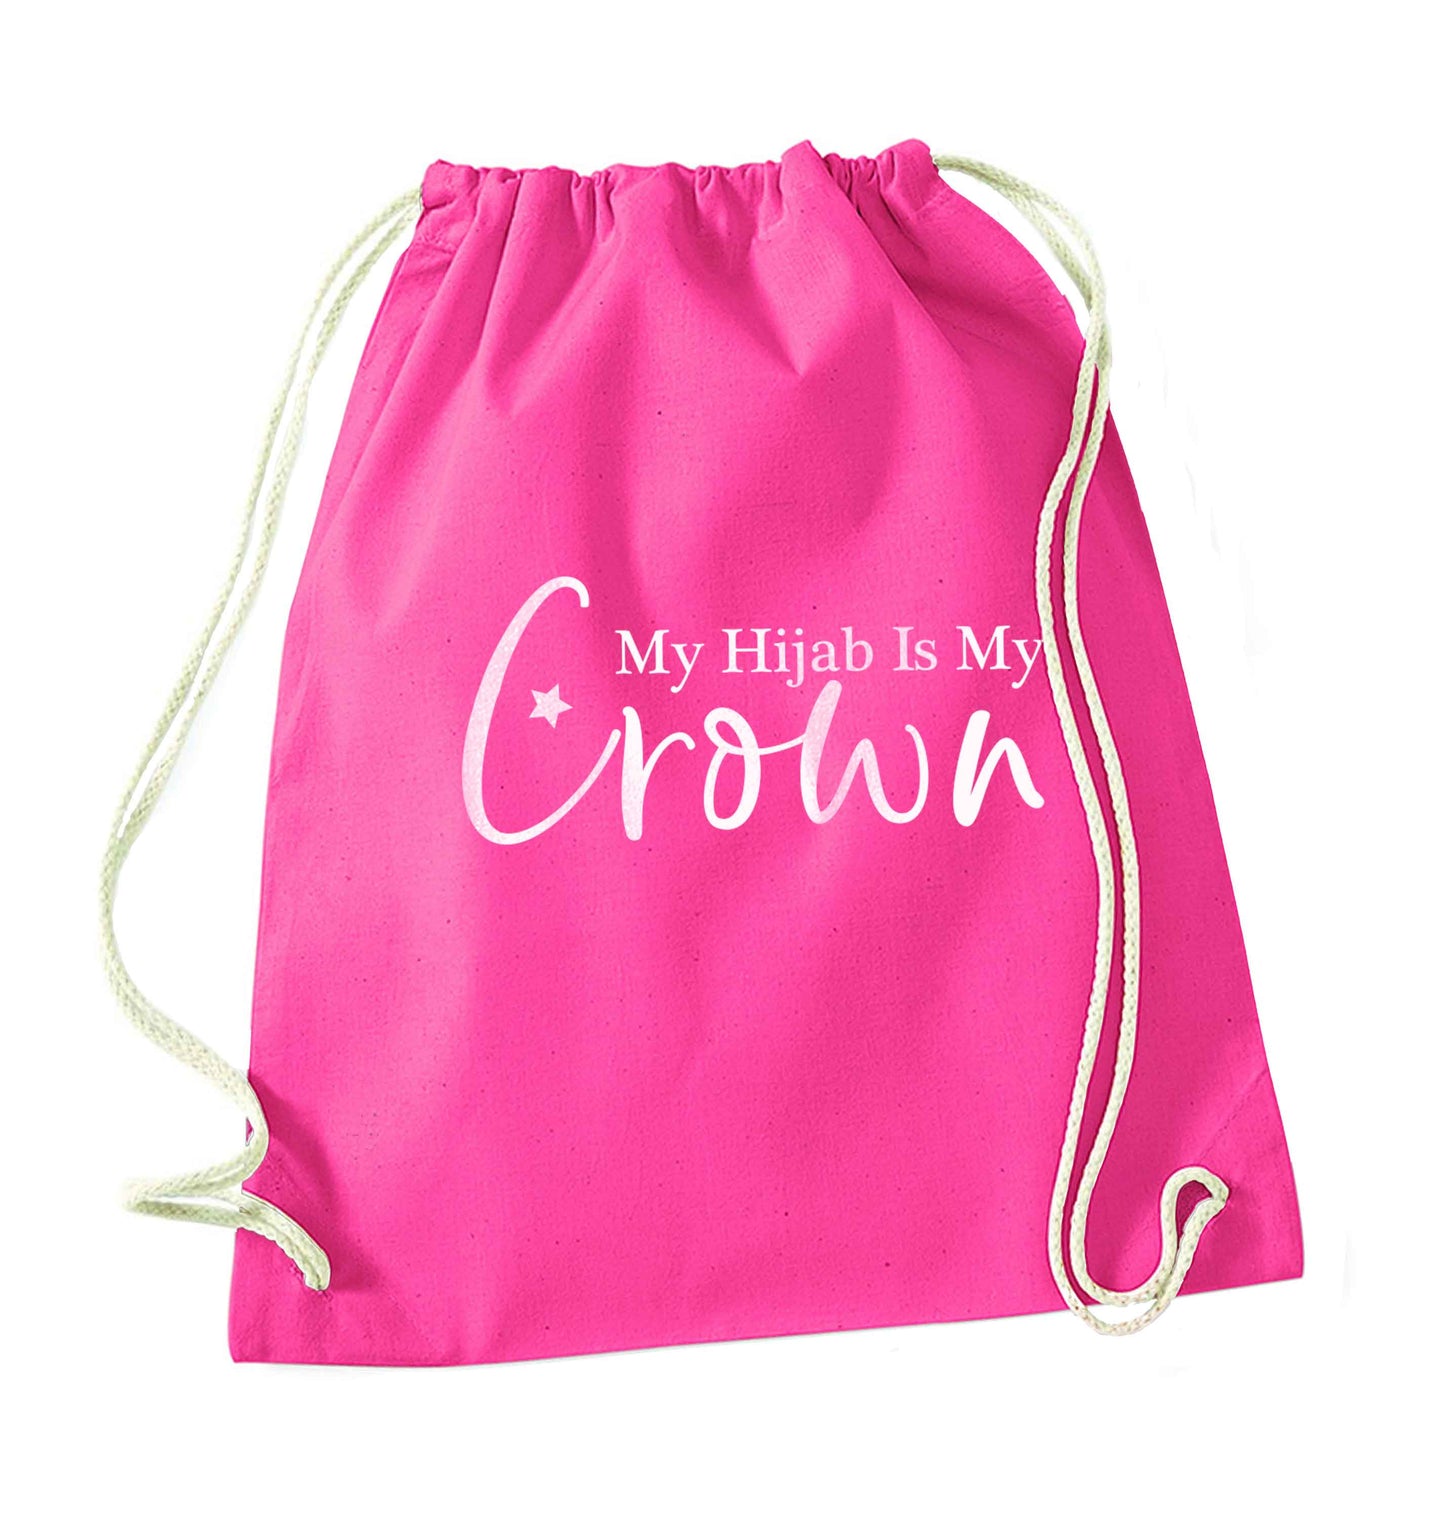 My hijab is my crown pink drawstring bag